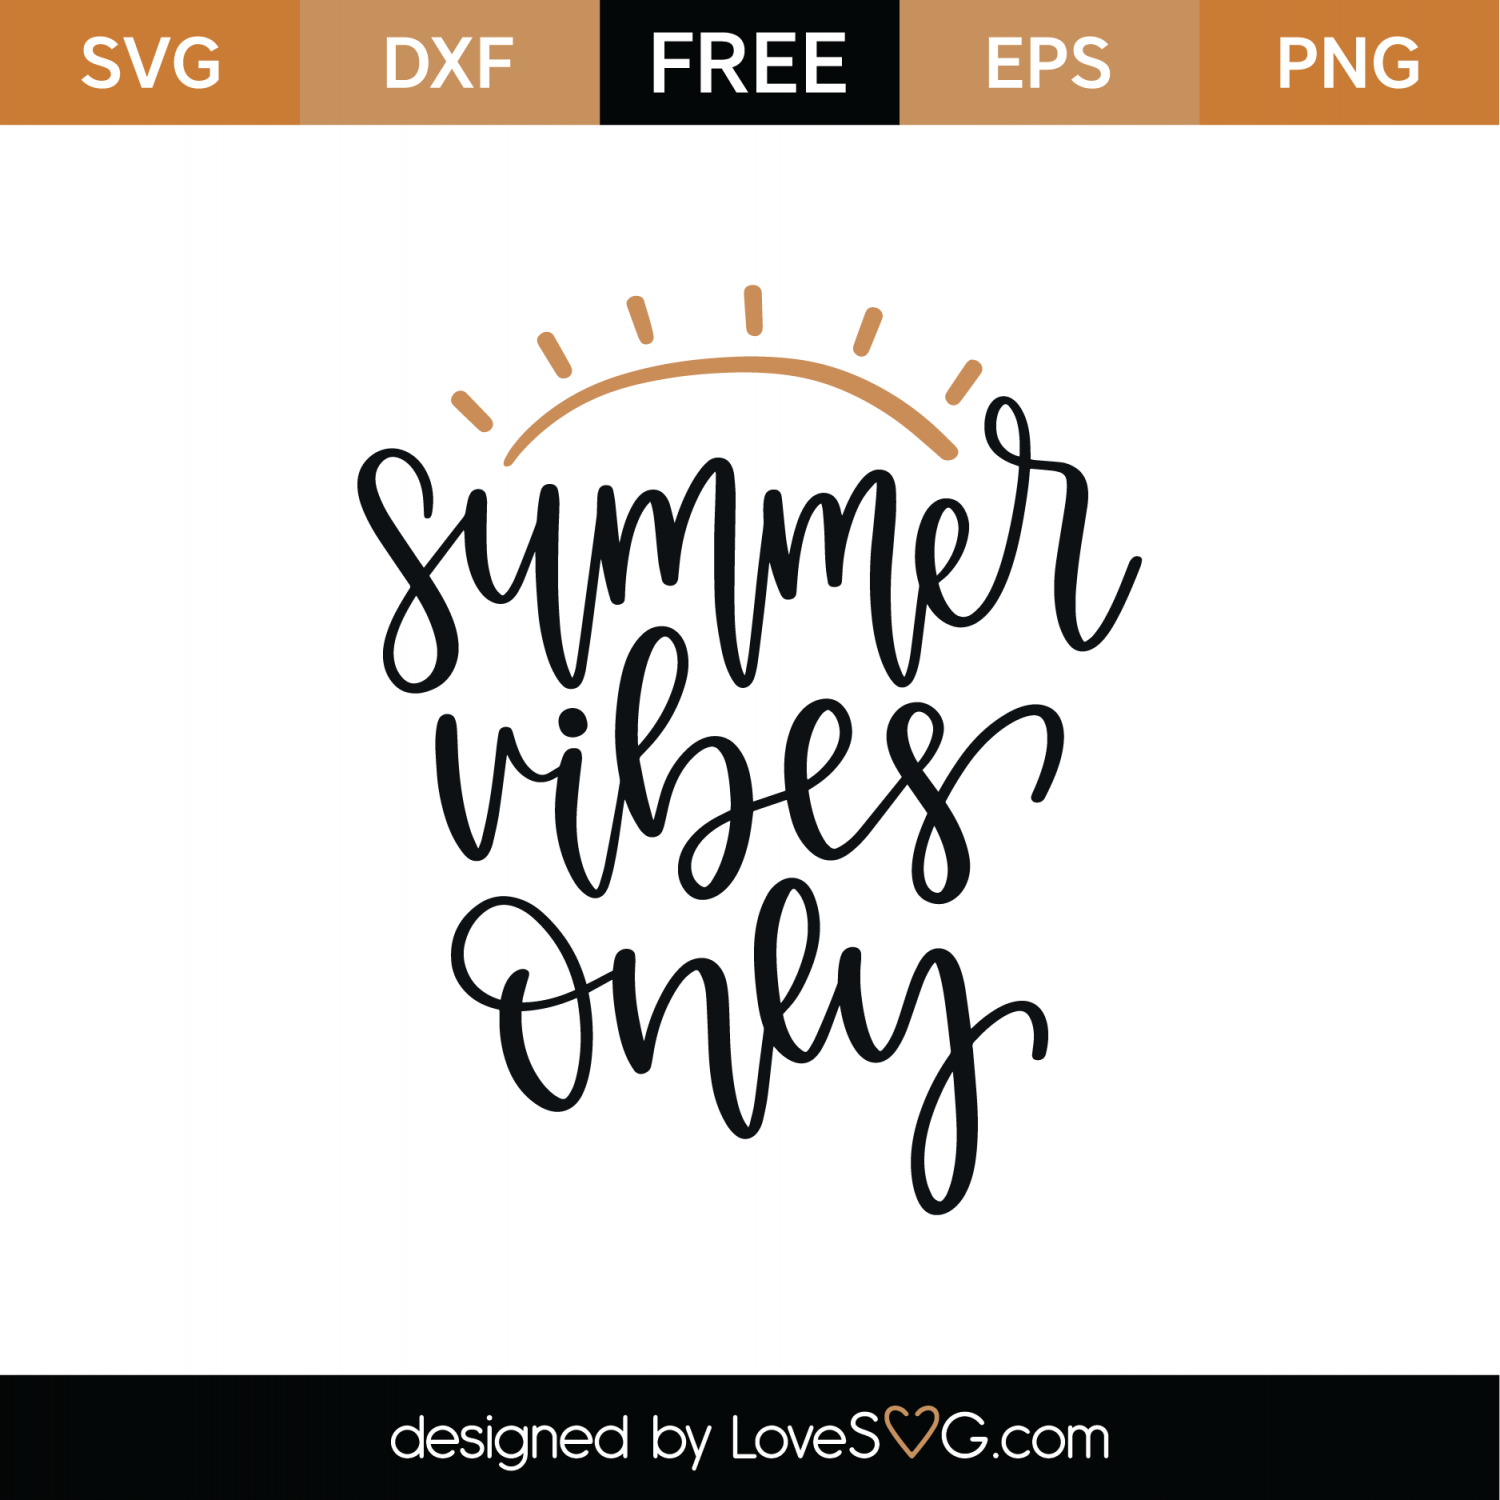 Download Free Summer Vibes Only SVG Cut File | Lovesvg.com